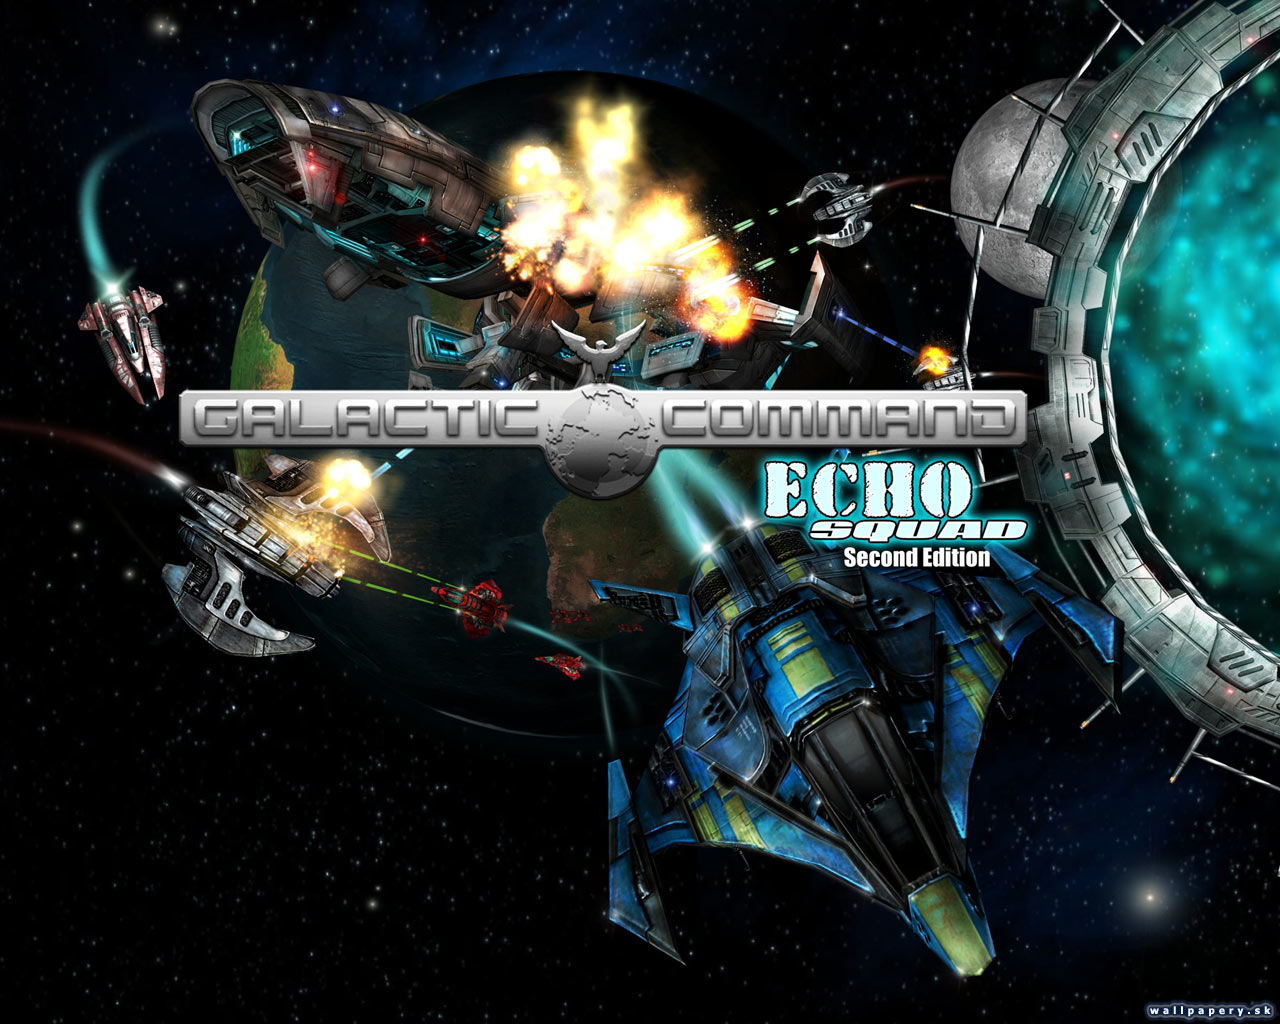 Galactic Command: Echo Squad Second Edition - wallpaper 1